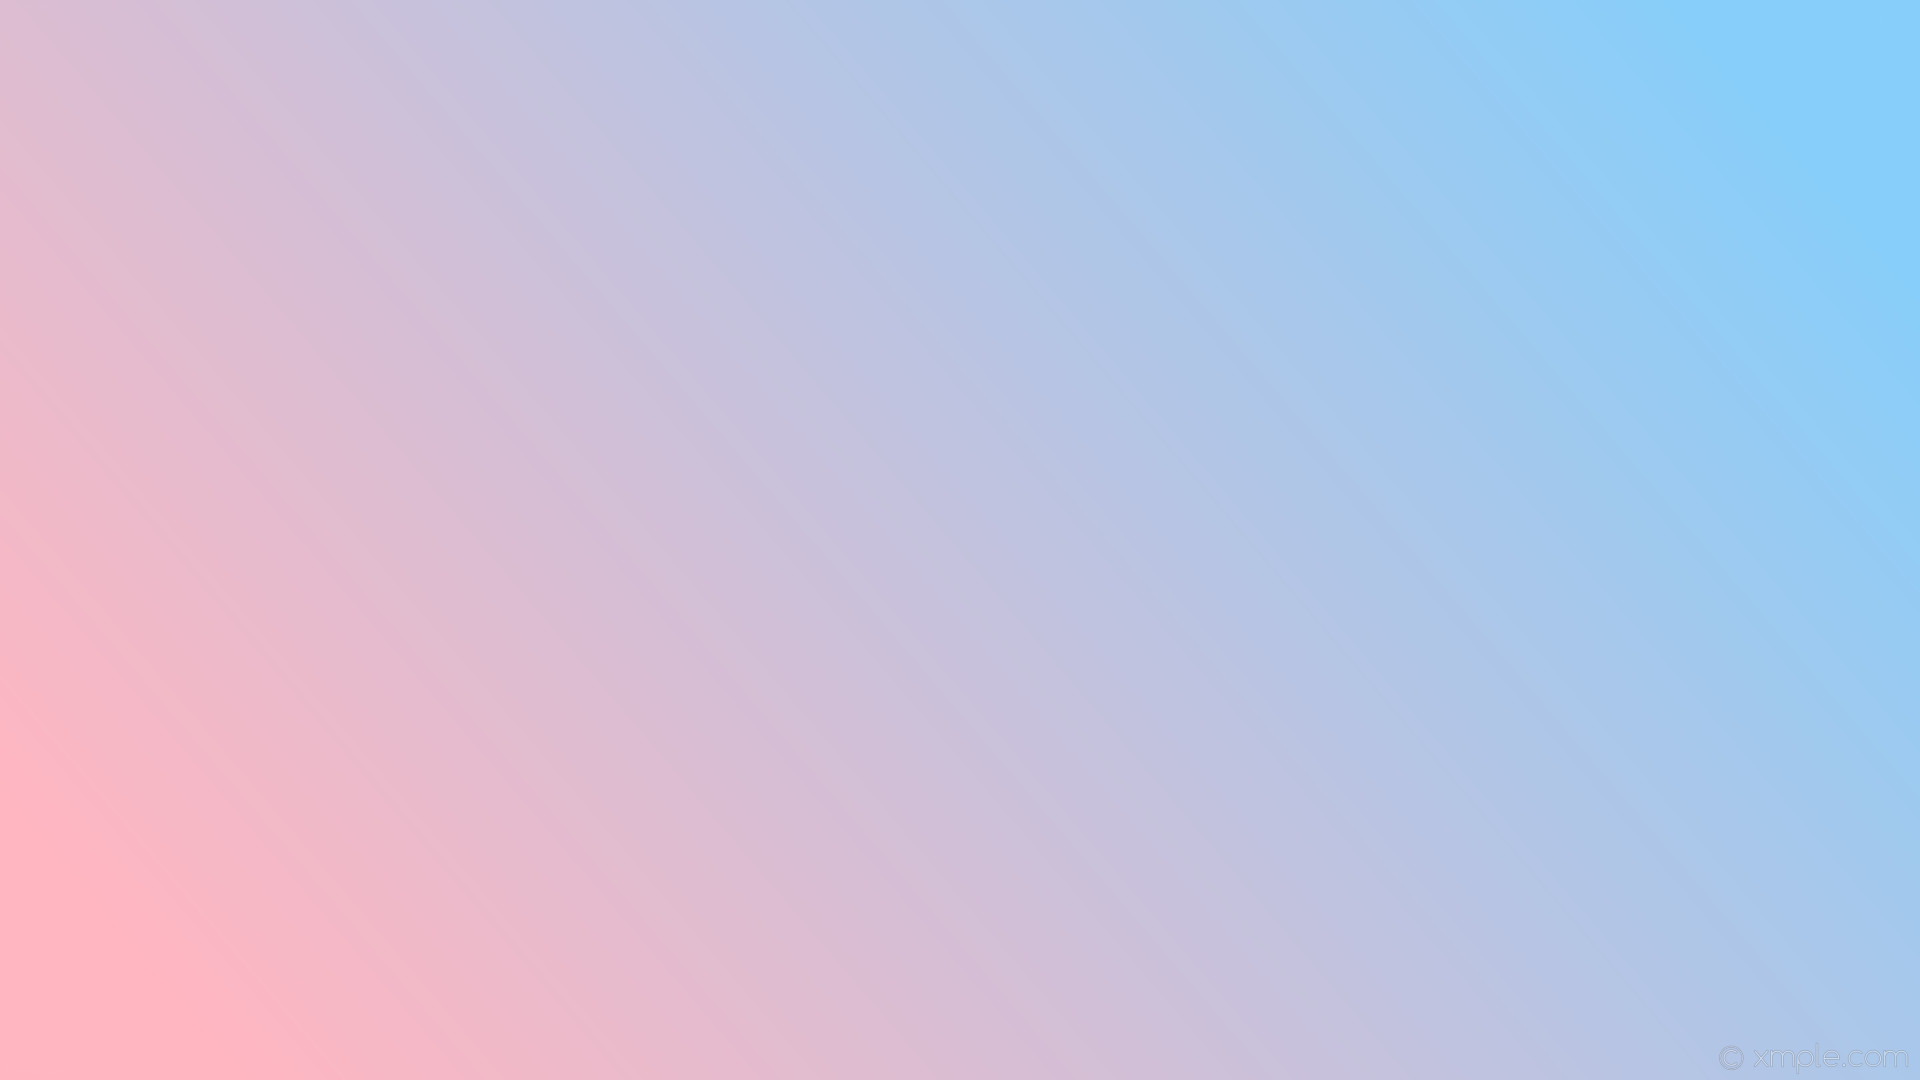 1920x1080 wallpaper pink blue gradient linear light sky blue light pink #87cefa  #ffb6c1 15Â°